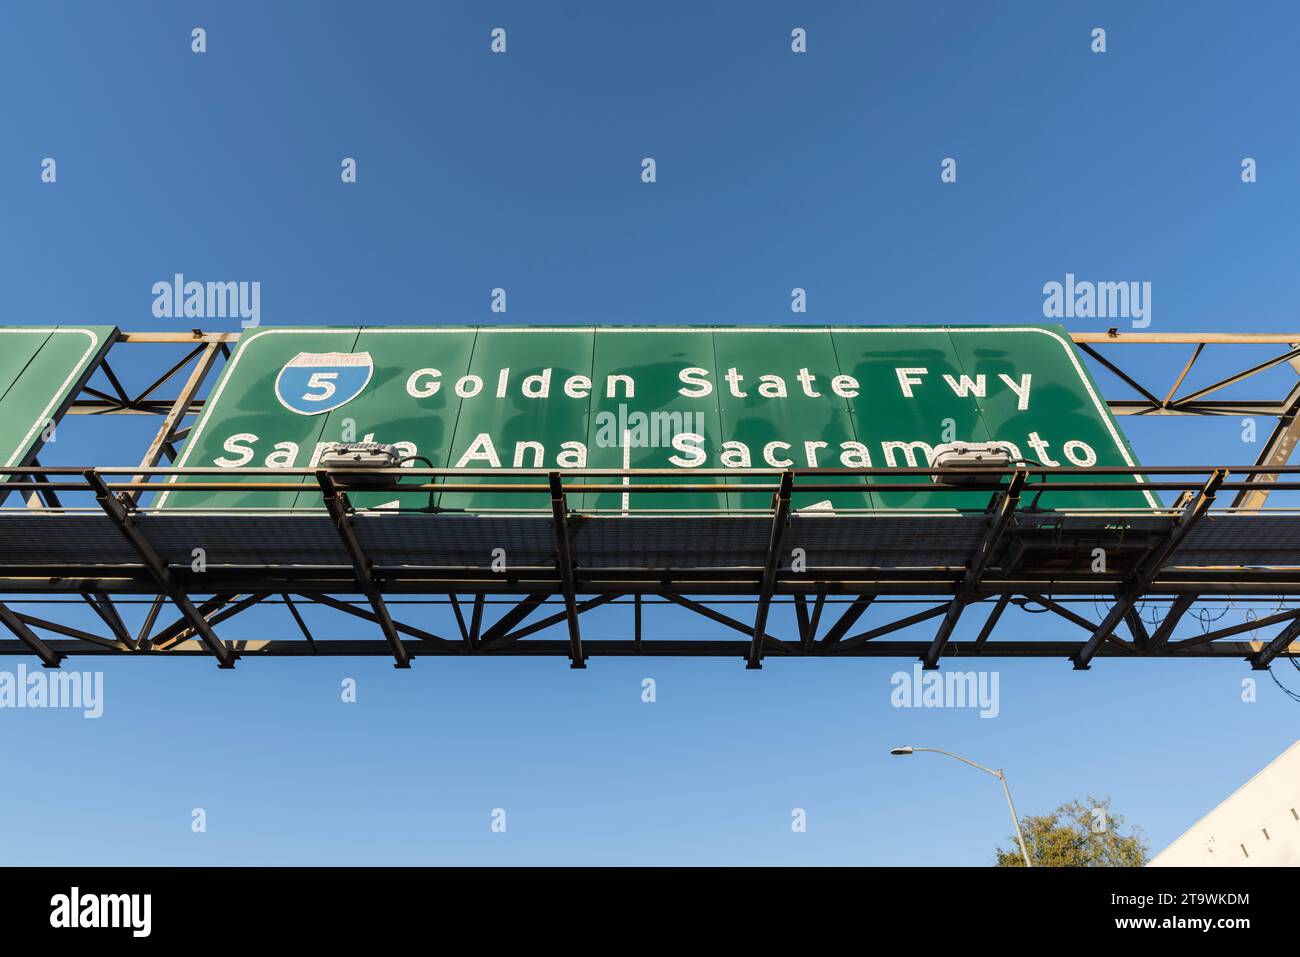 Los Angeles Interstate 5 Golden State Freeway sign to Santa Ana or Sacramento California. Stock Photo